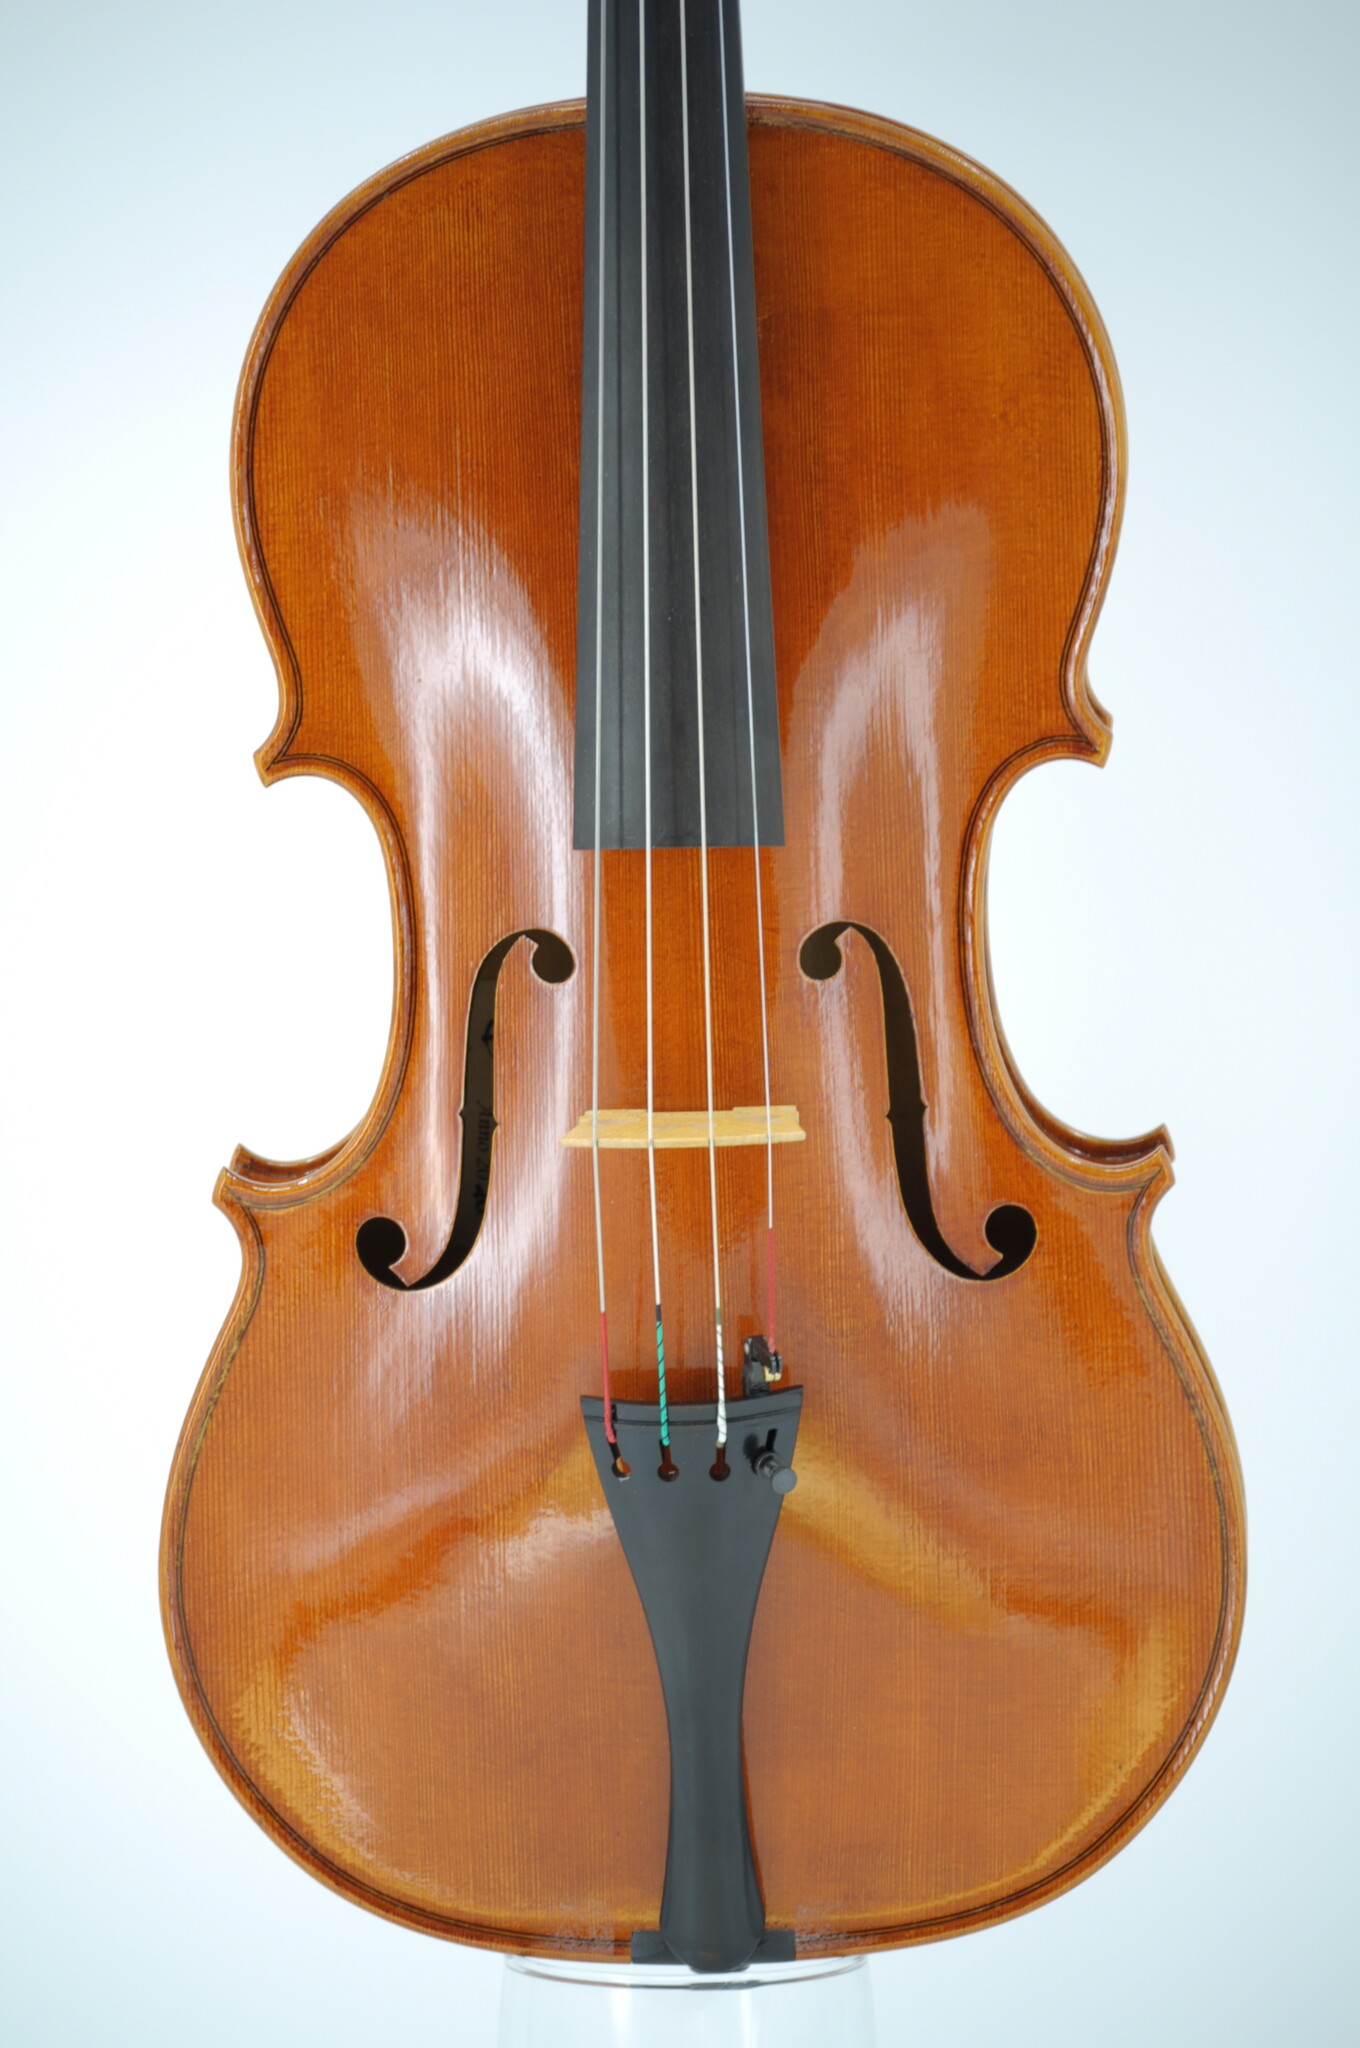 Dorian Barnes 16" viola, with Avodire wood back/ribs/scroll, Denver, CO, 2020